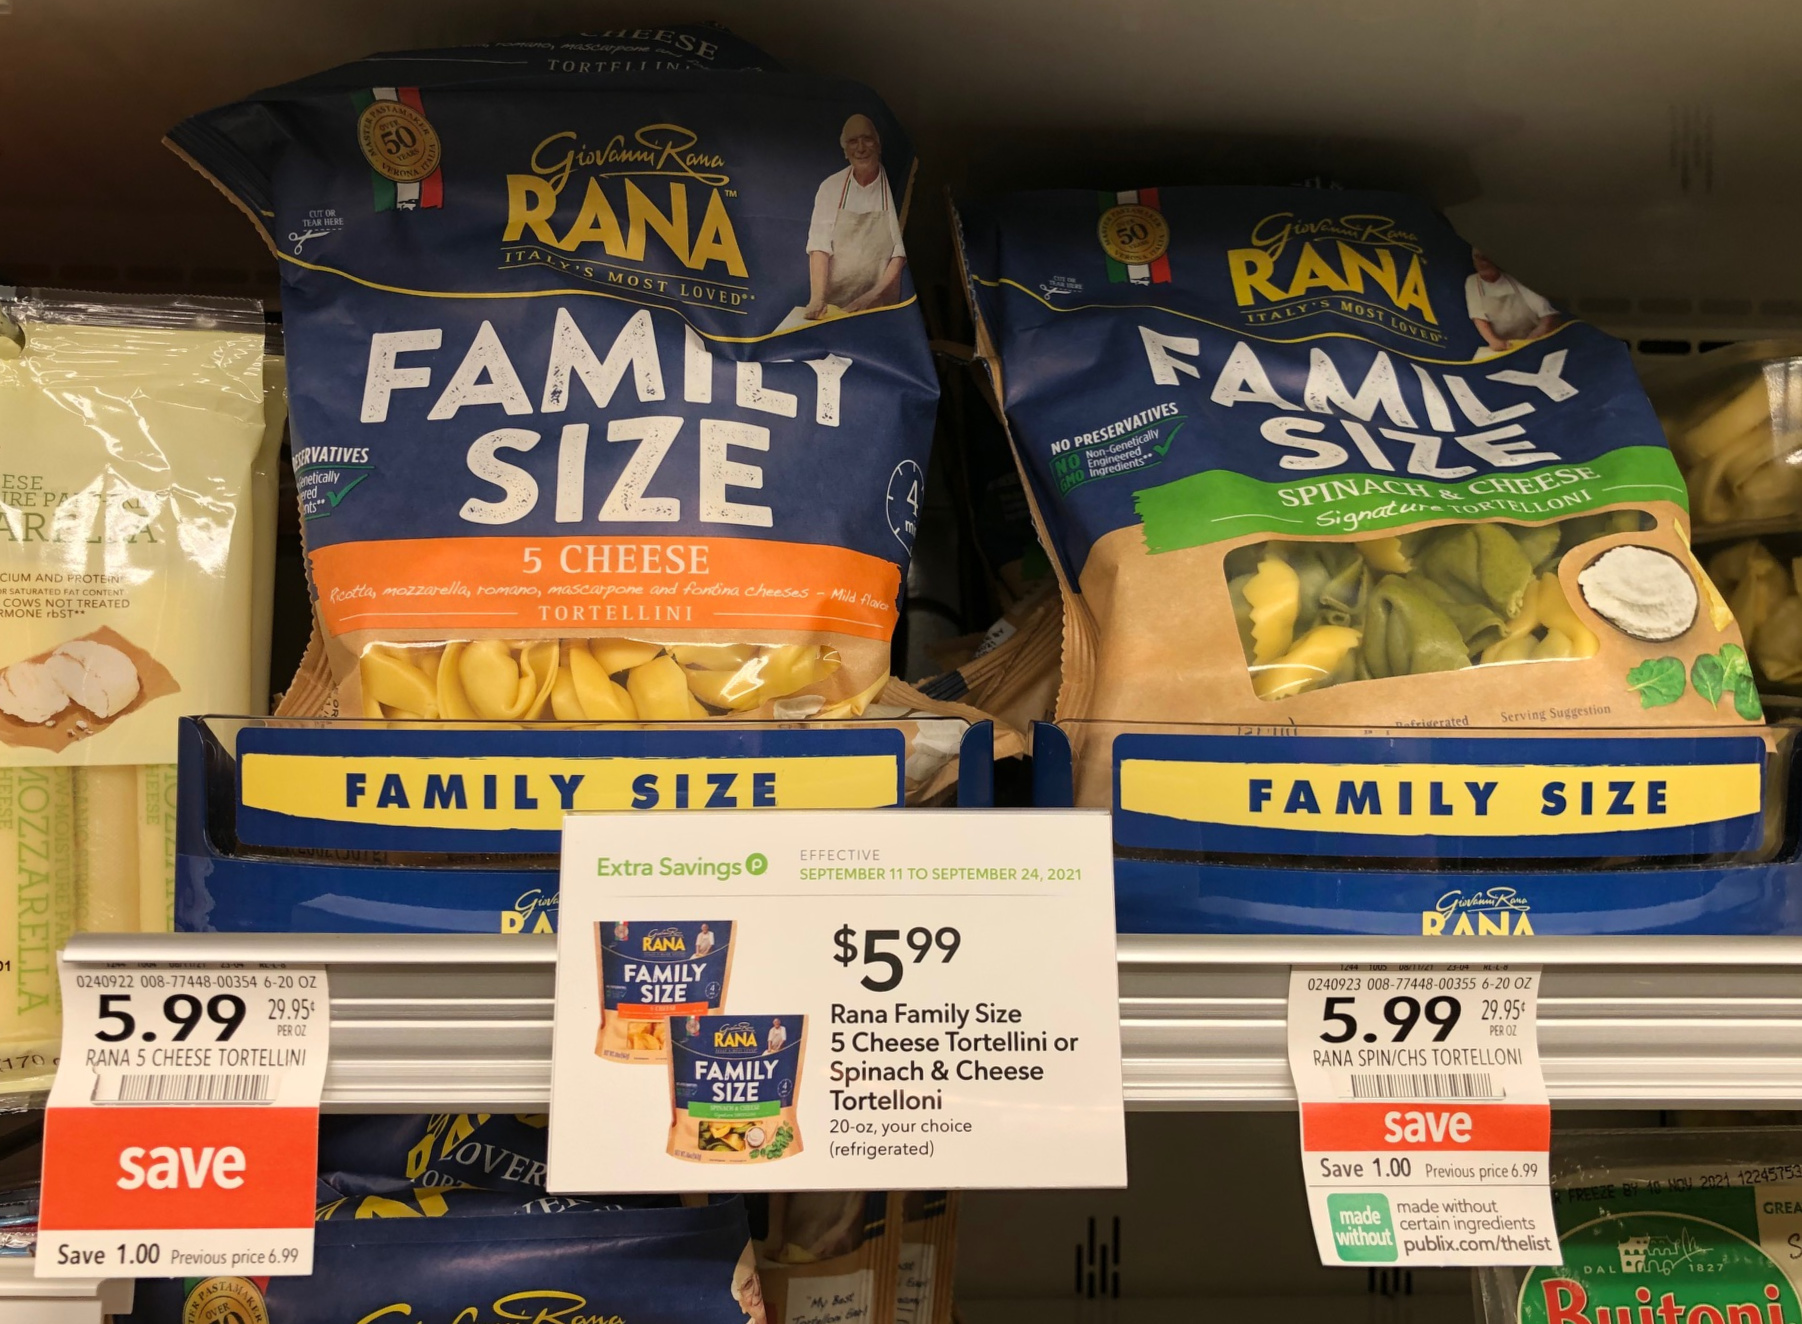 Rana Family Size Pasta Only $4.49 At Publix on I Heart Publix 6